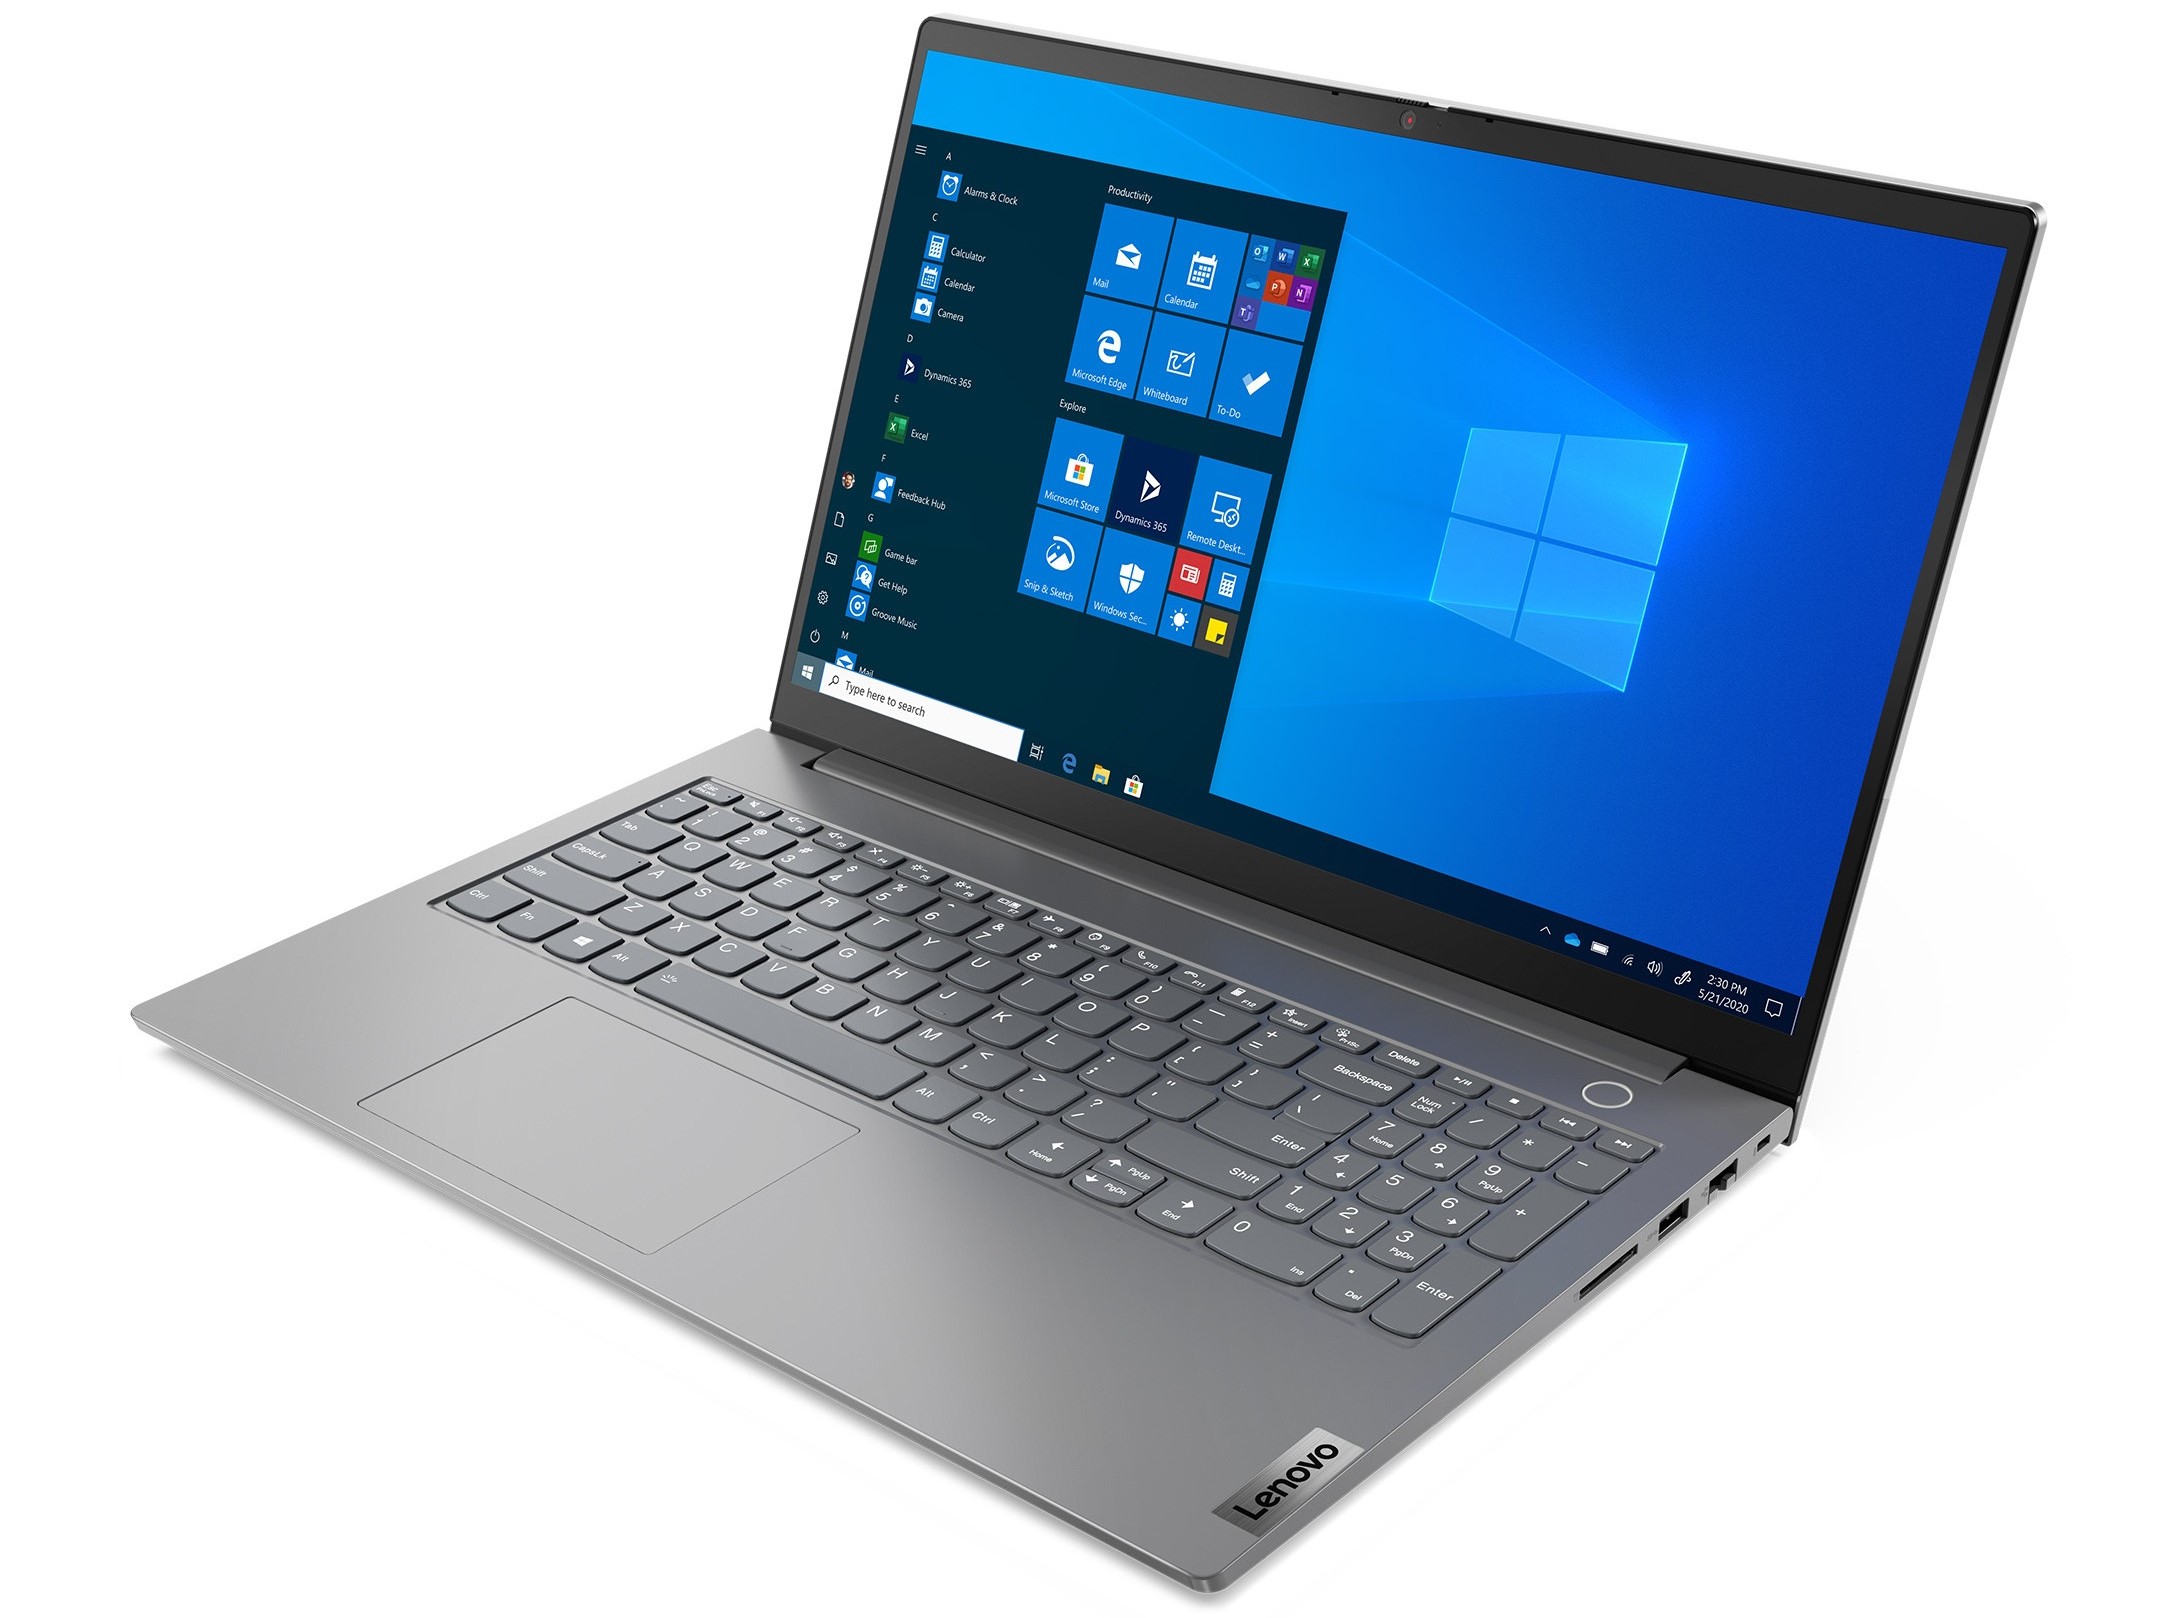 Lenovo ThinkBook 15 Gen2 Laptop review: Affordable Tiger Lake laptop